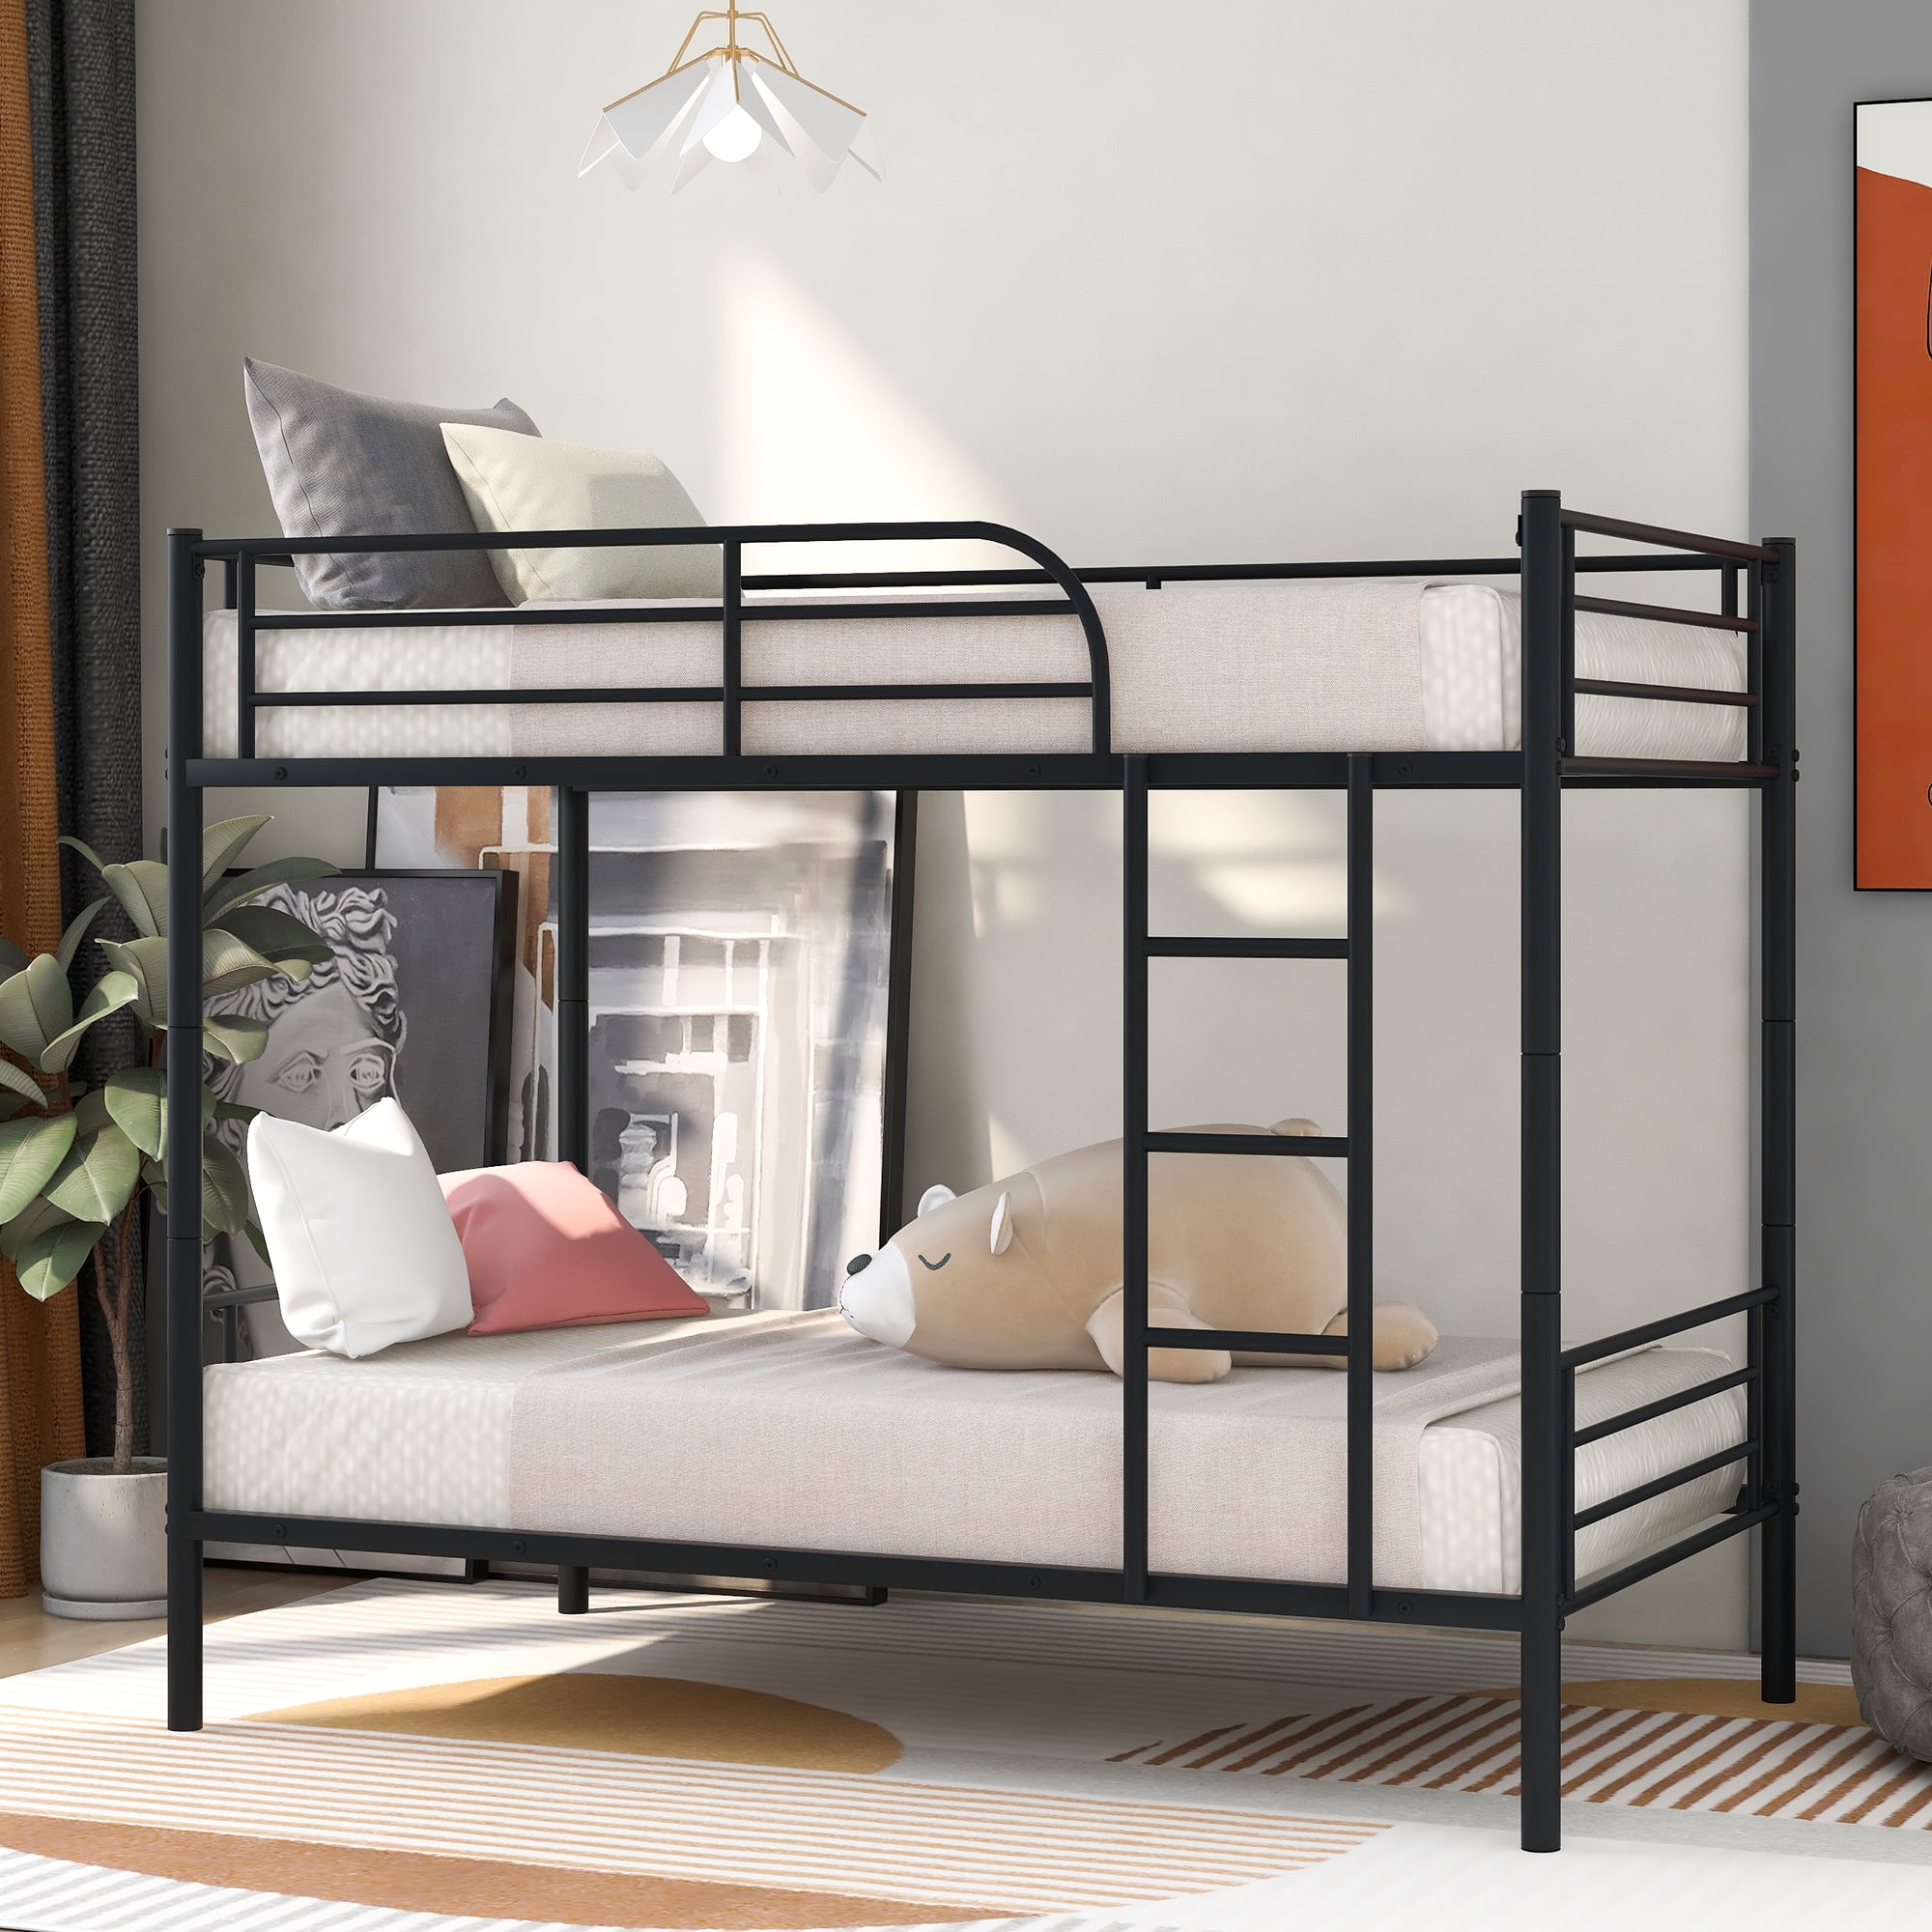 Details about   Twin Loft Bunk Bed Metal Frame Two-Side Ladder Beds Teens Kids Bedroom Full Size 